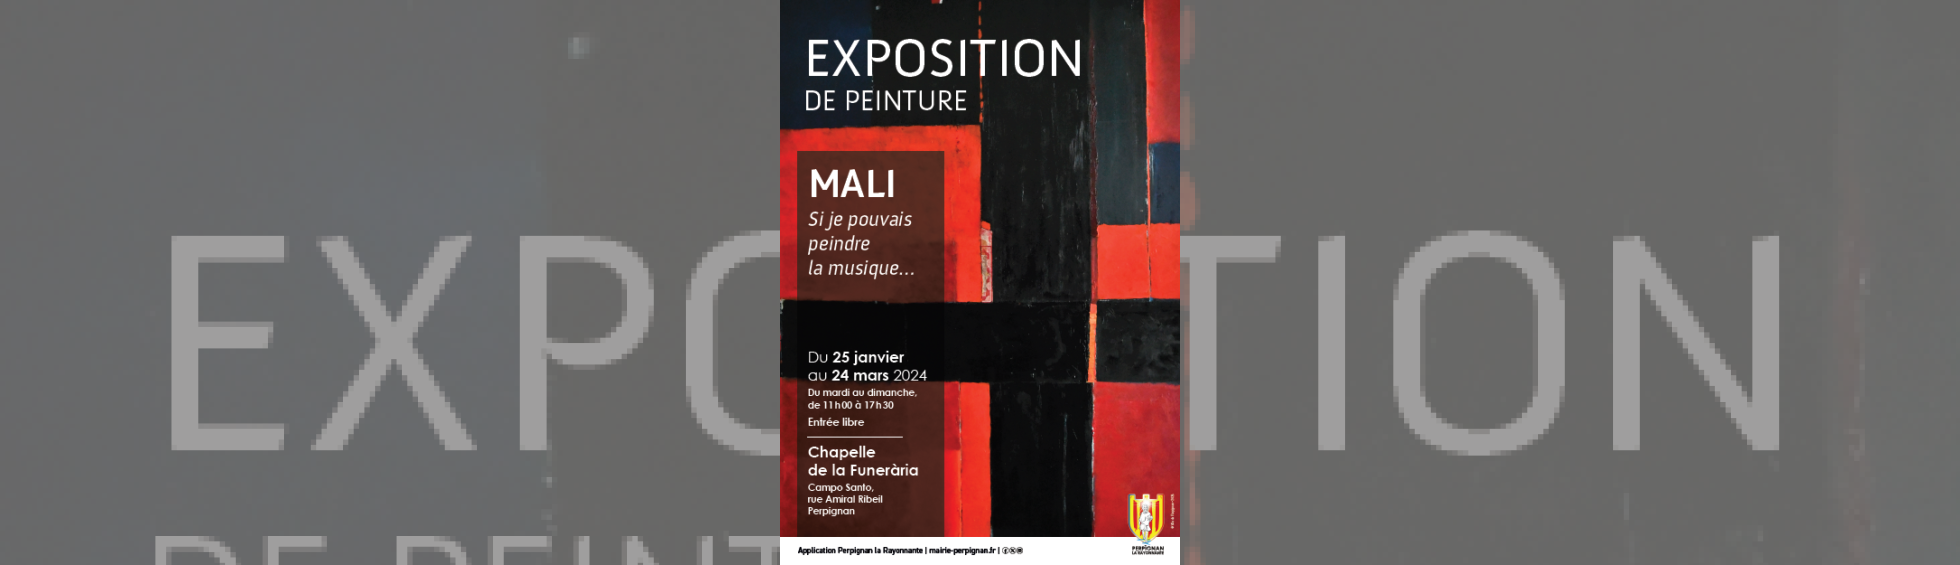 affiche exposition MALI